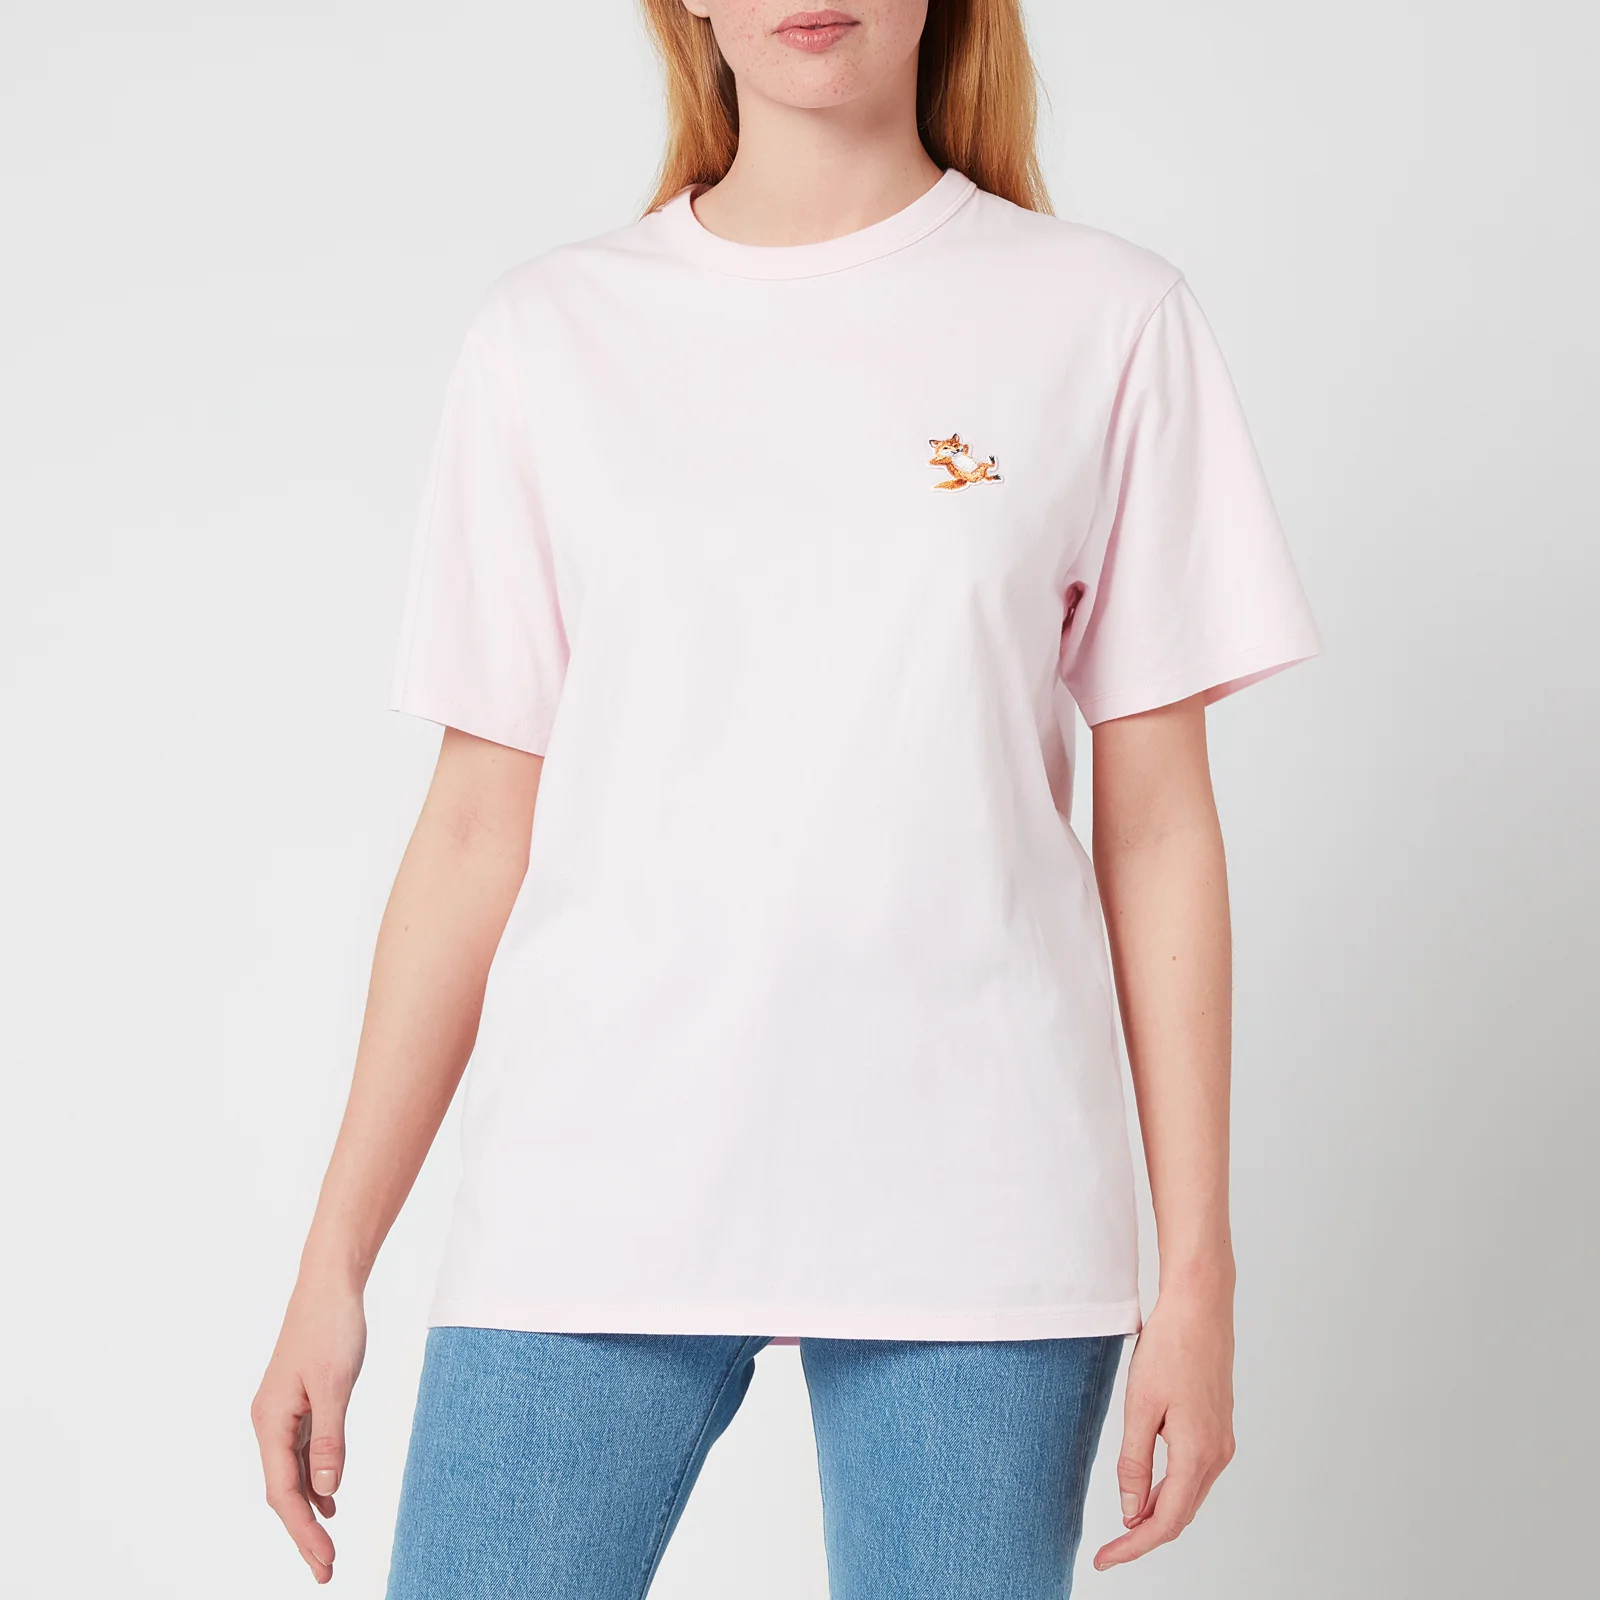 Maison Kitsuné Women's Chillax Fox Patch Classic T-Shirt - Light Pink Image 1